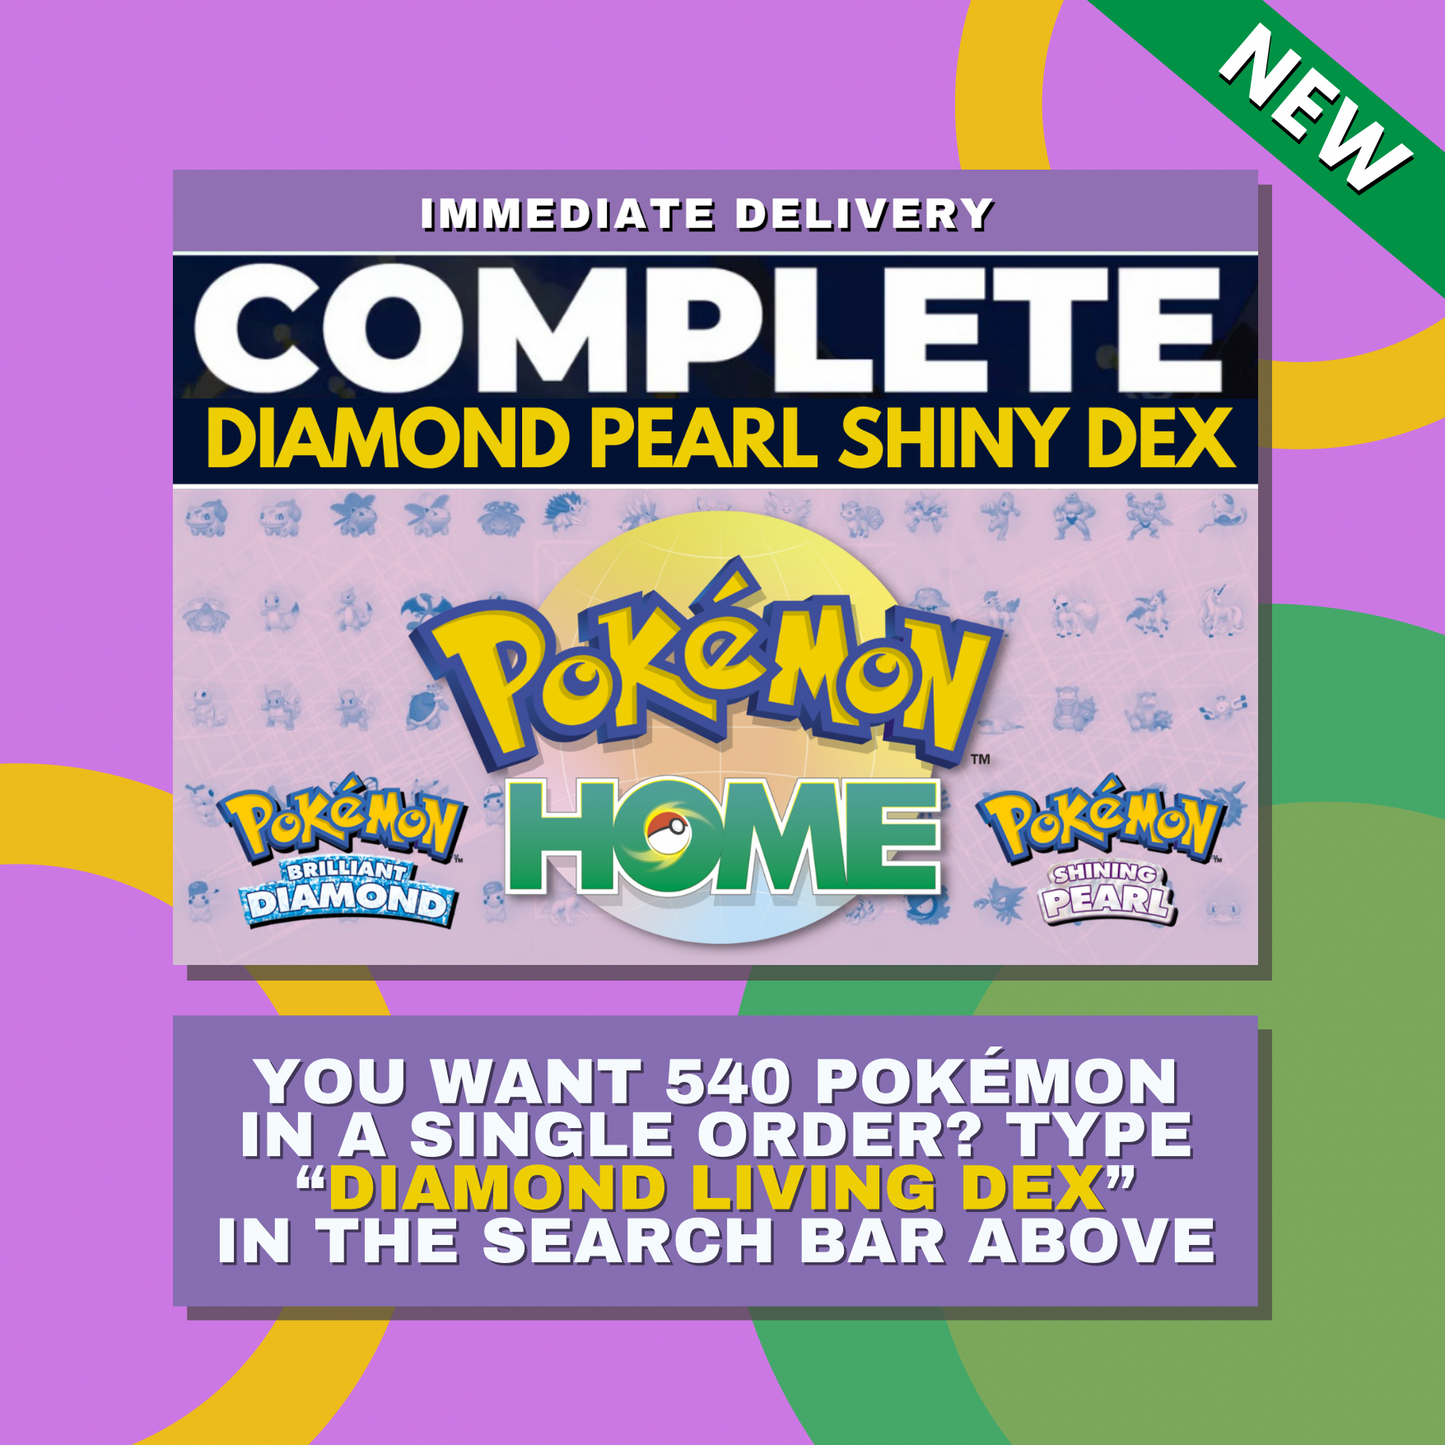 Ursaring Shiny ✨ or Non Shiny Pokémon Brilliant Diamond Shining Pearl Battle Ready 6 IV Competitive 100% Legit Level 100 Customizable Custom OT by Shiny Living Dex | Shiny Living Dex